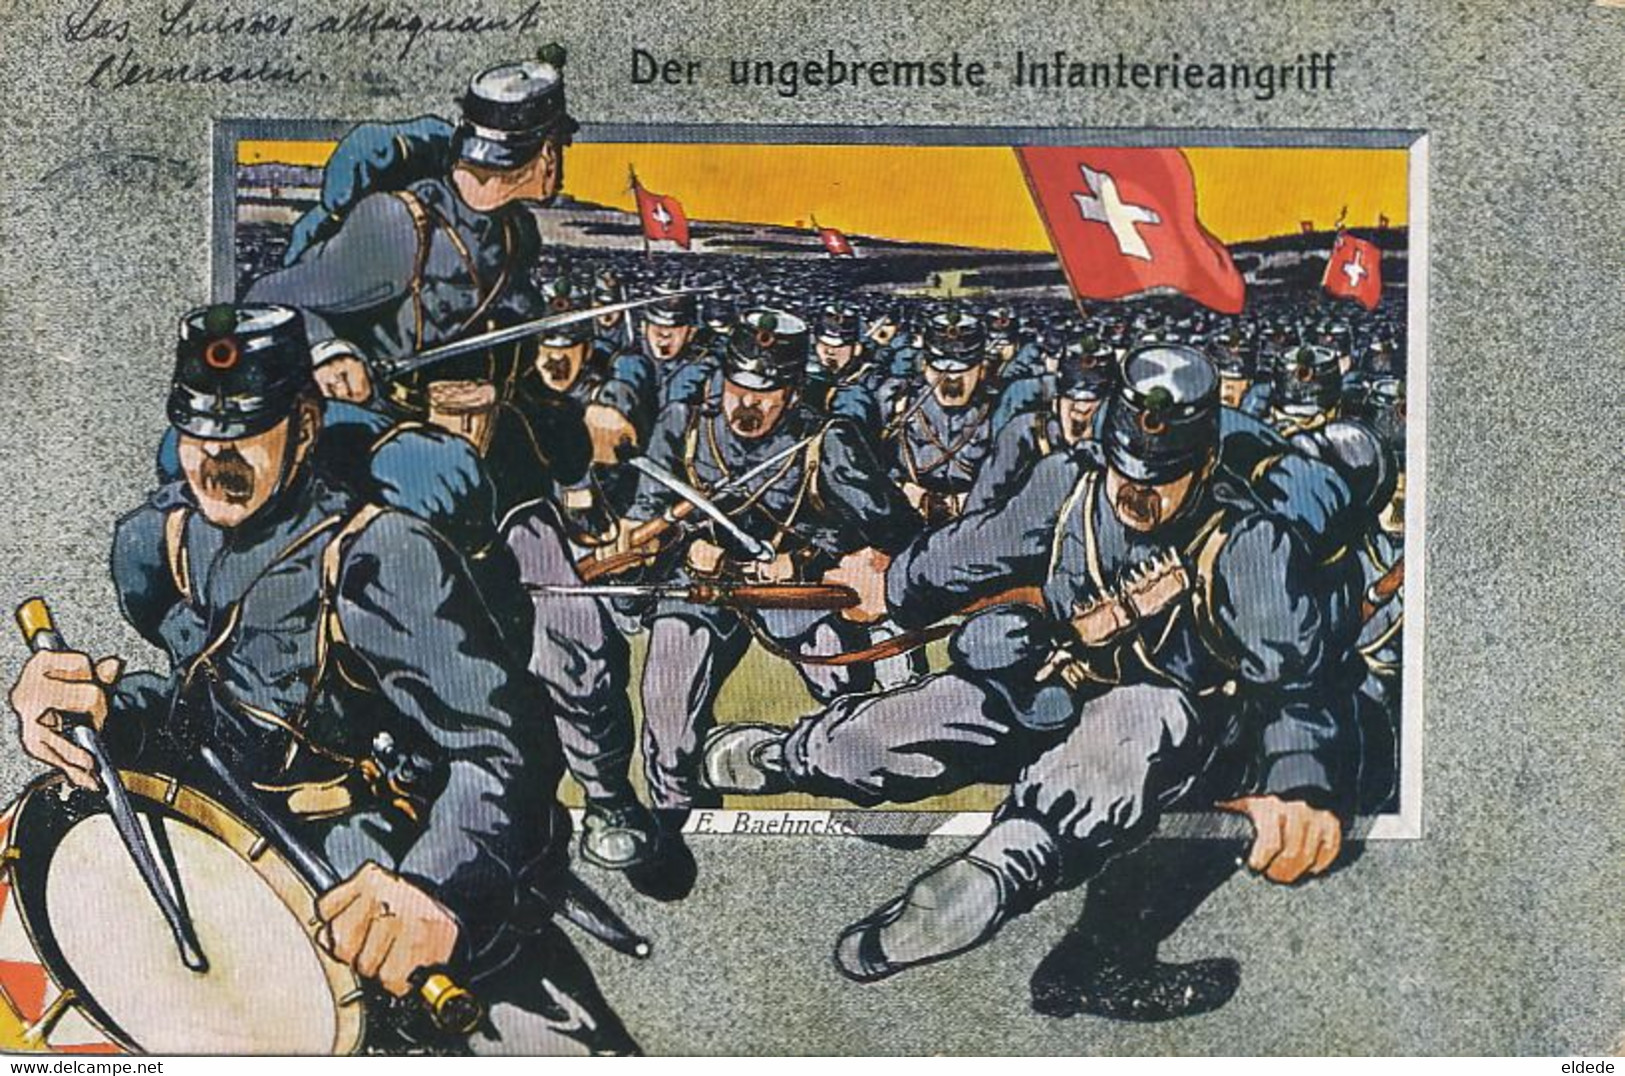 Der Ungebremste Infanterieangriff Signed E. Baehncke Art Card Les Suisses Attaquant L' Ennemi - Domat/Ems